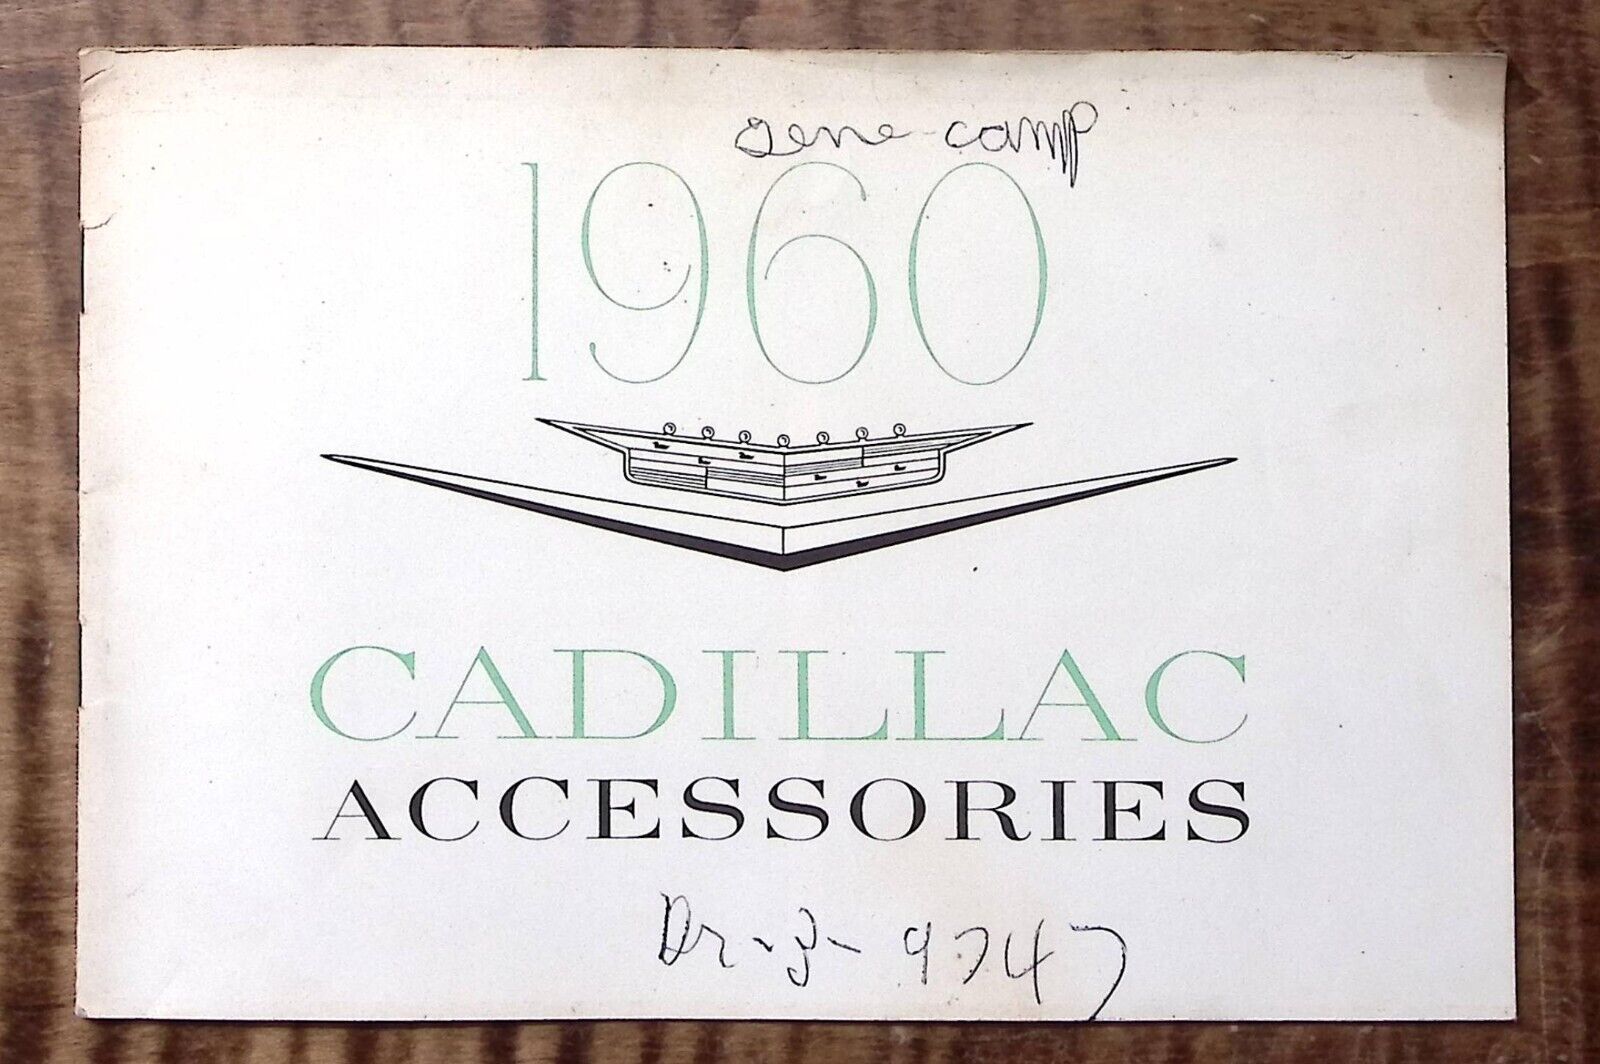 1960 CADILLAC ACCESSORIES MANUAL ORIGINAL GLOVE BOX INFORMATION NICE Z4994